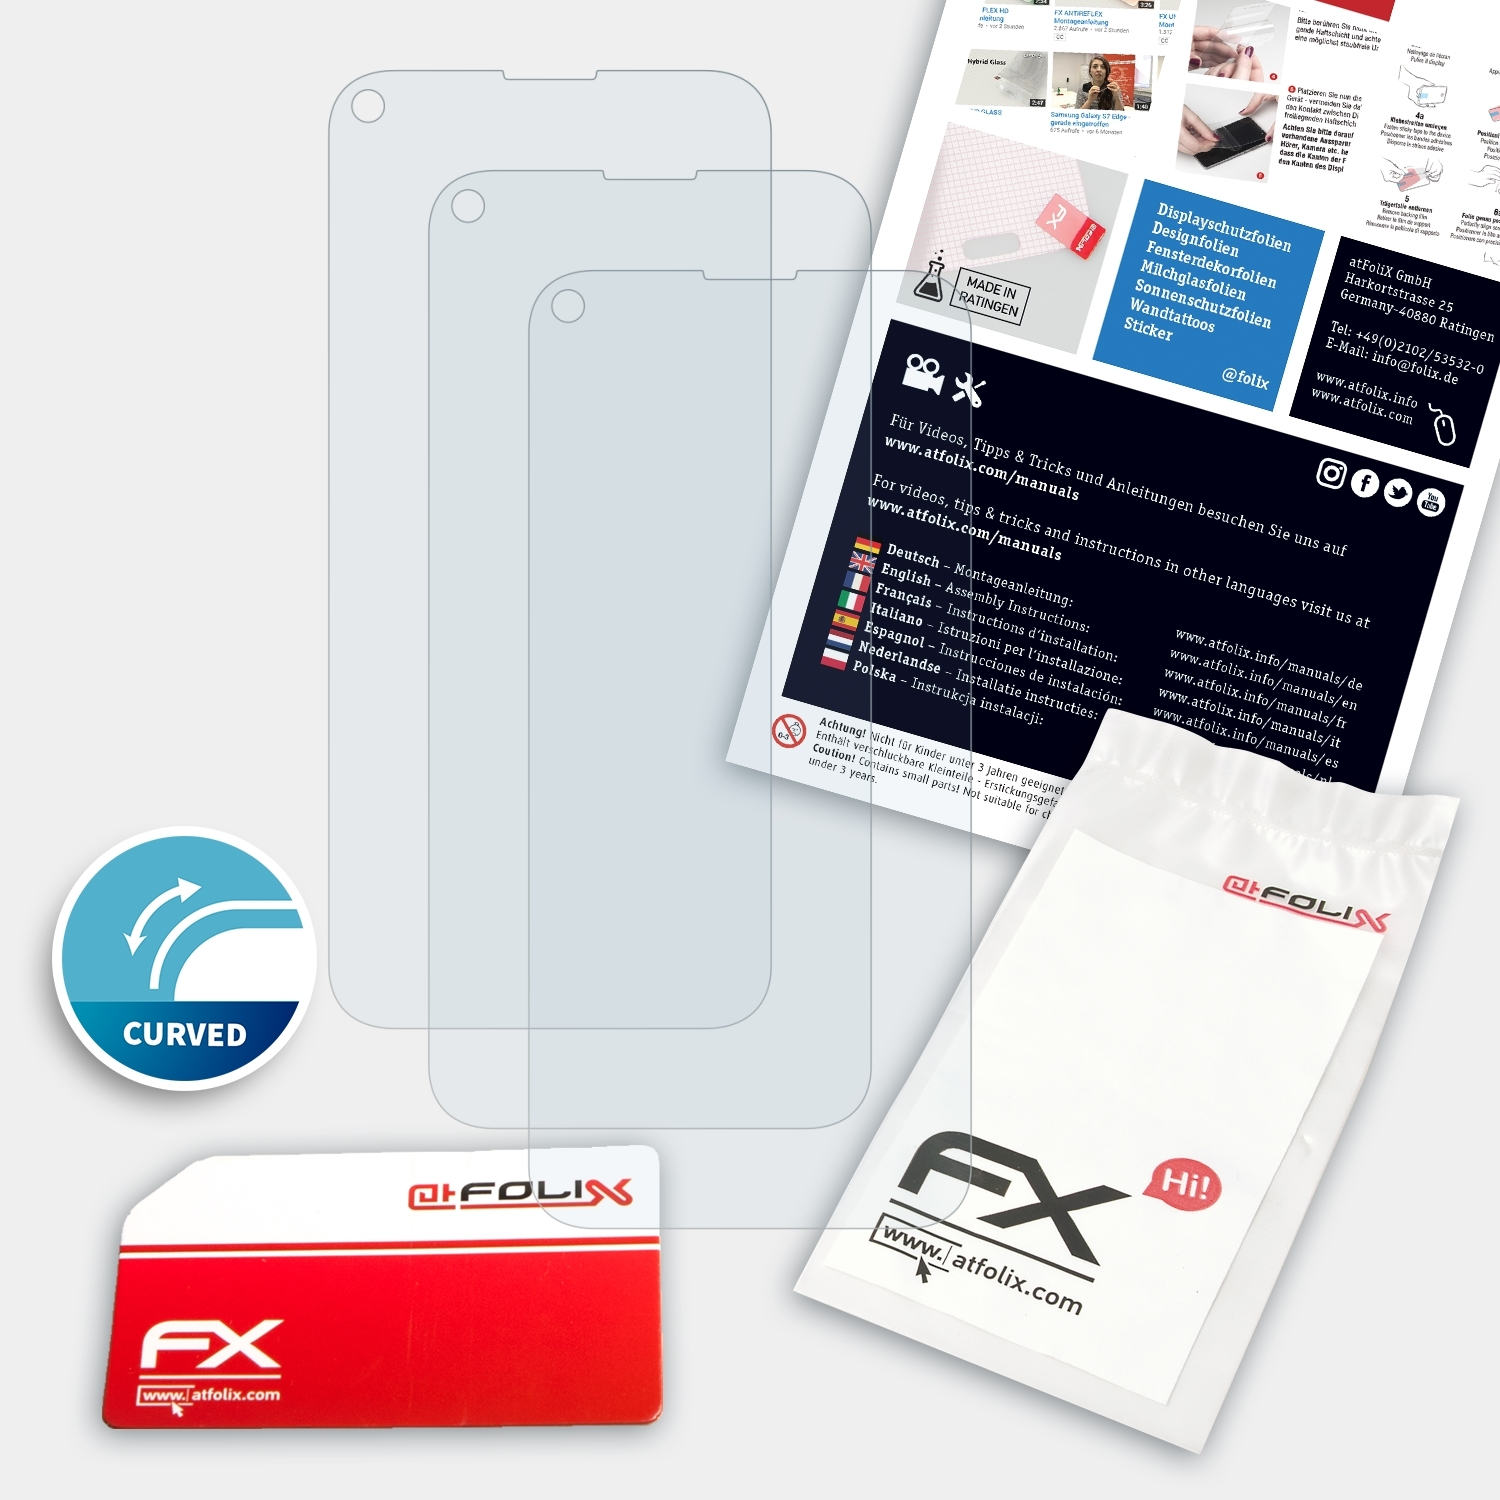 Displayschutz(für ATFOLIX Pro) Huawei 20 3x FX-ActiFleX Honor